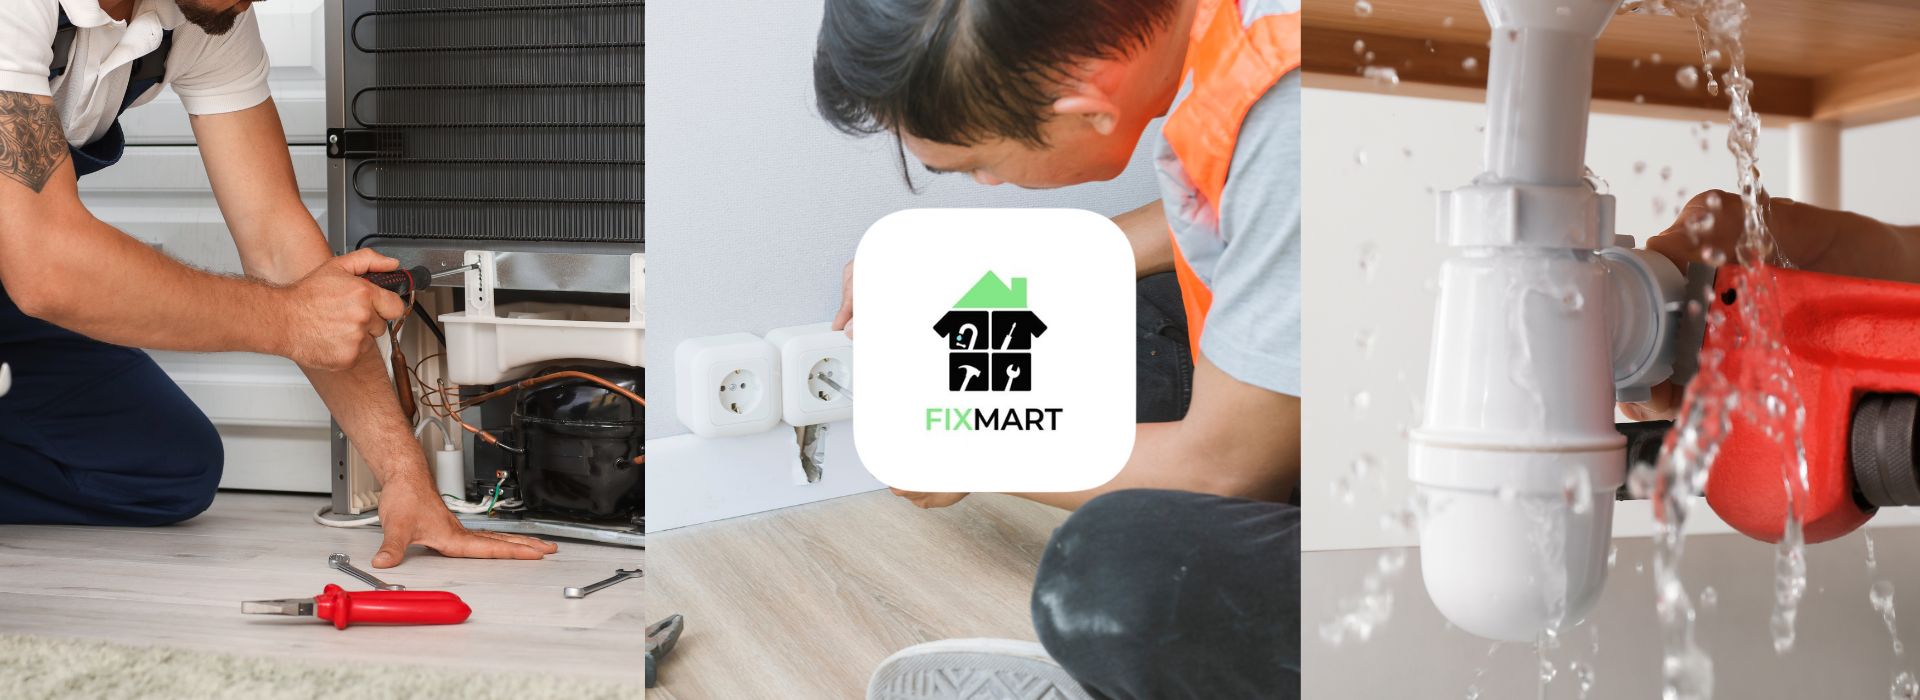 Download Our FixMart app